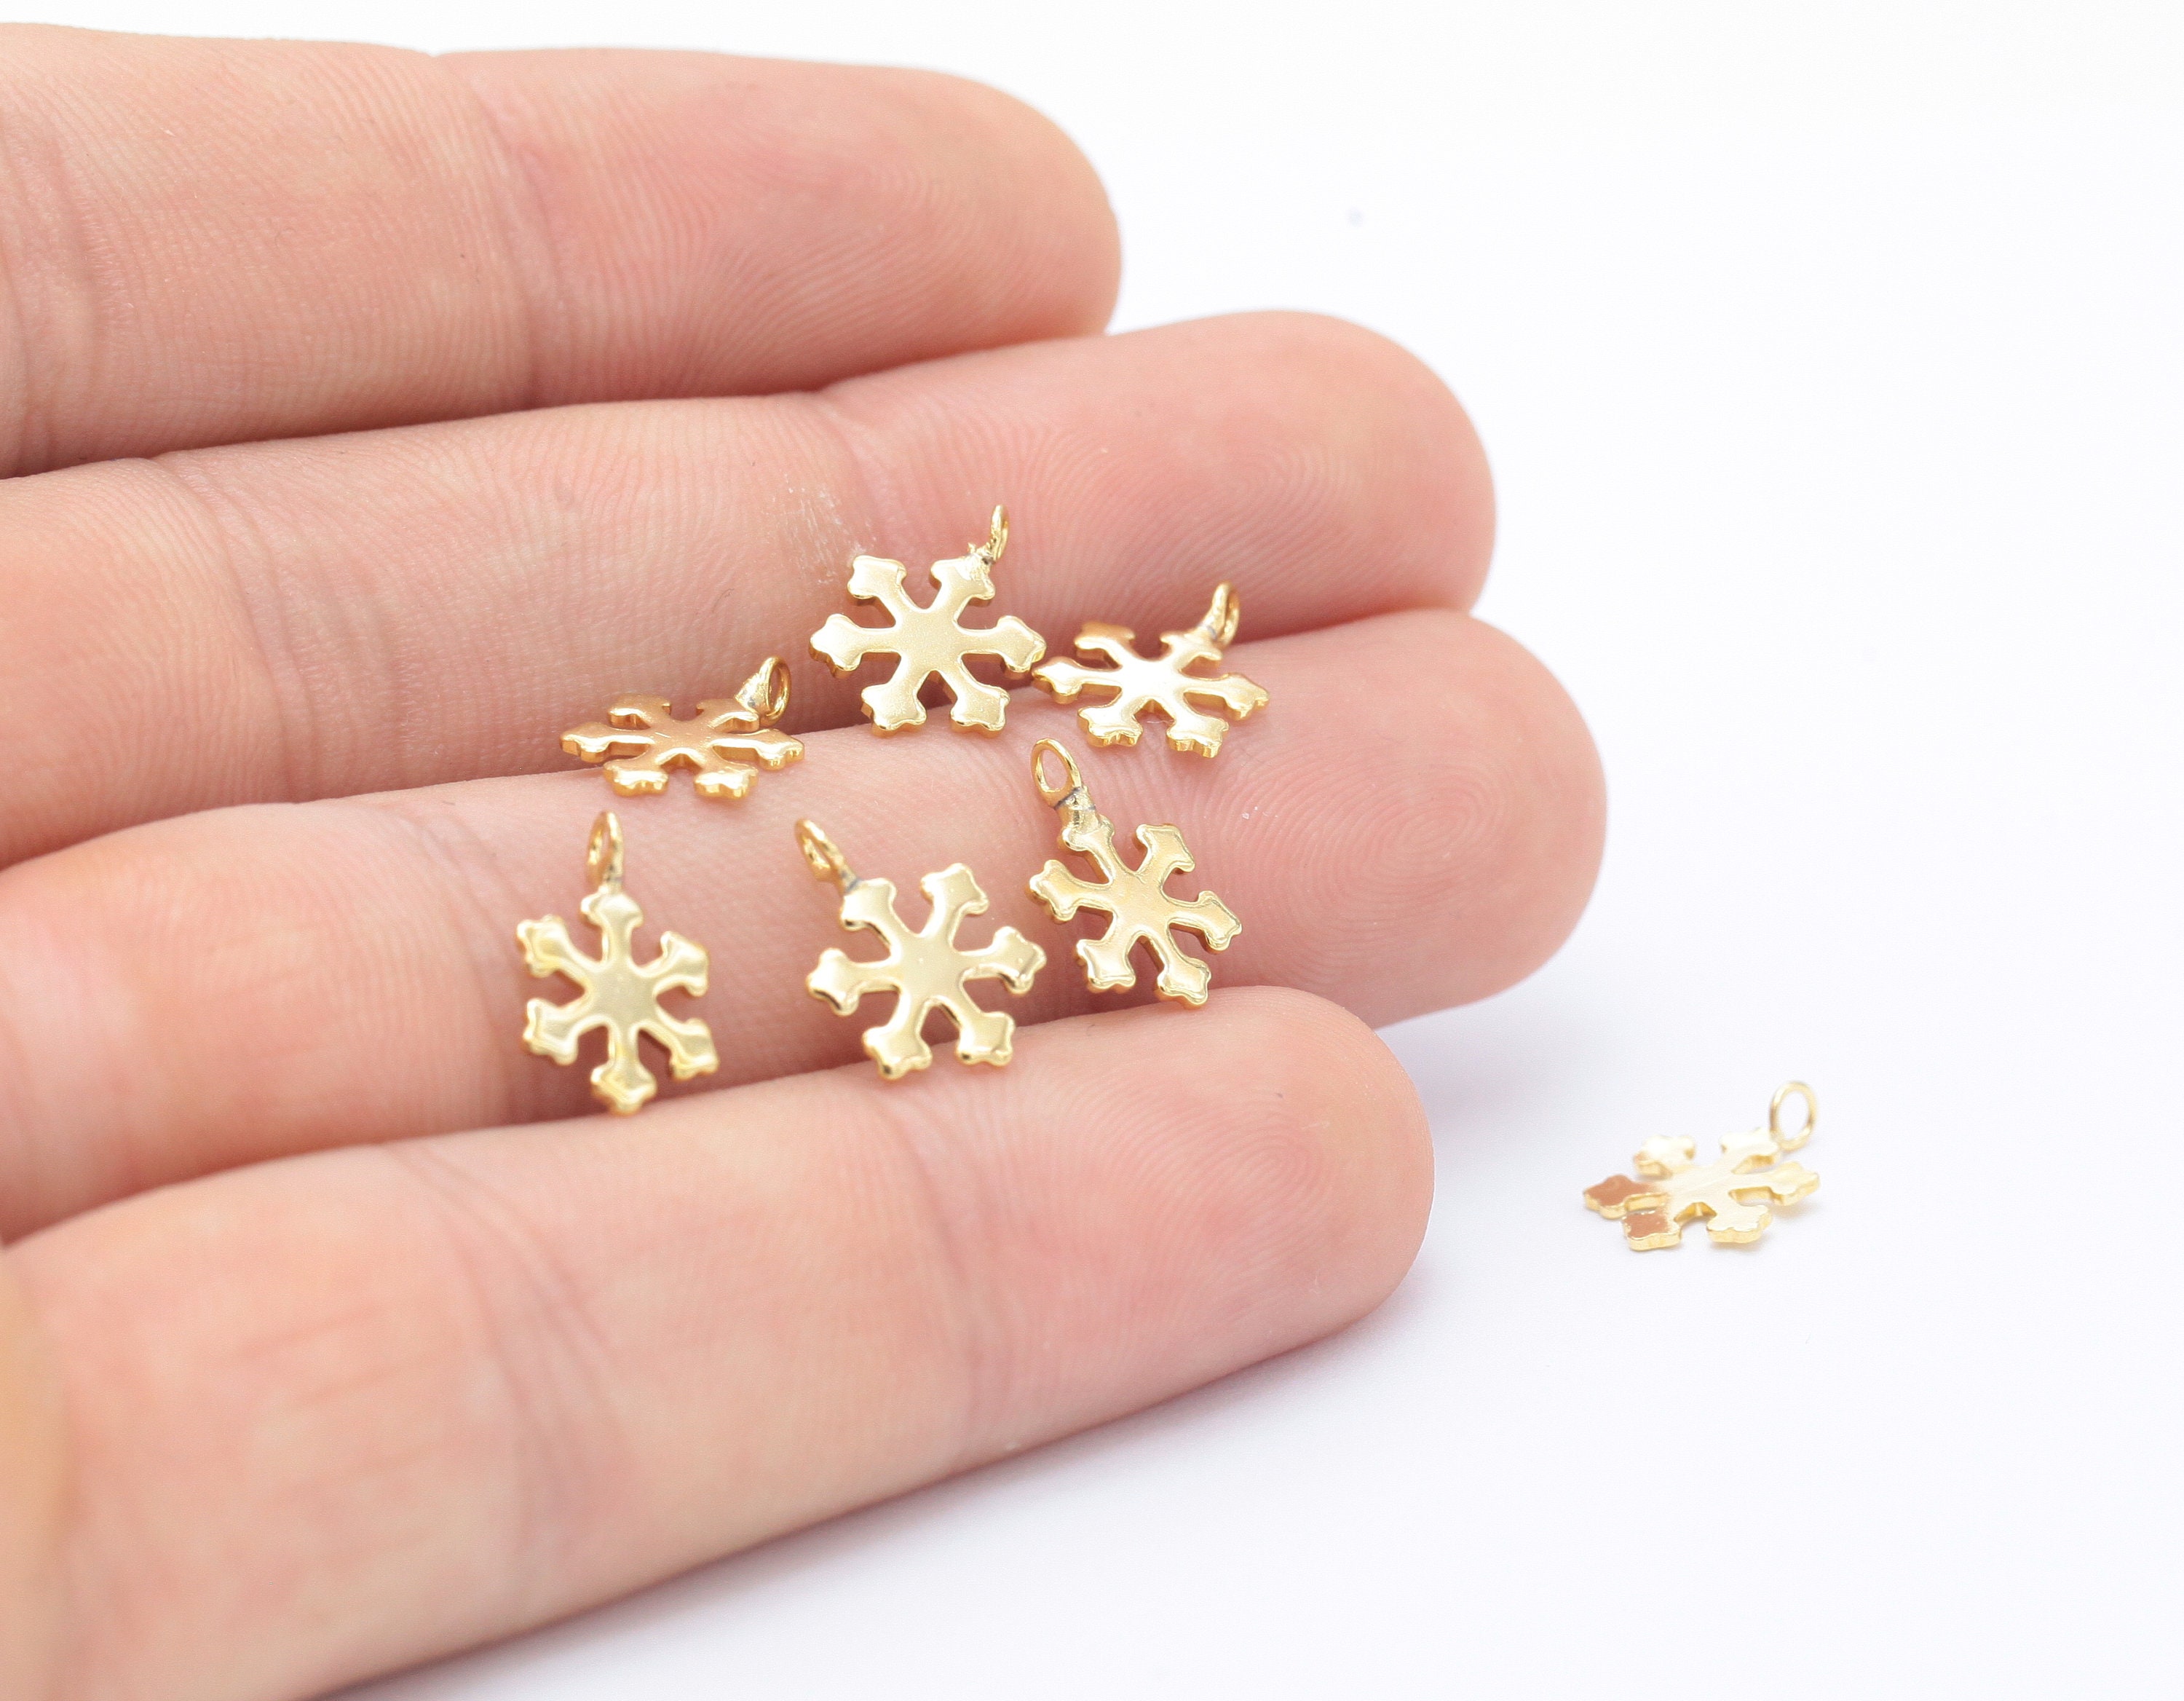  Didiseaon 50pcs Mini Snowflake Ornaments Small